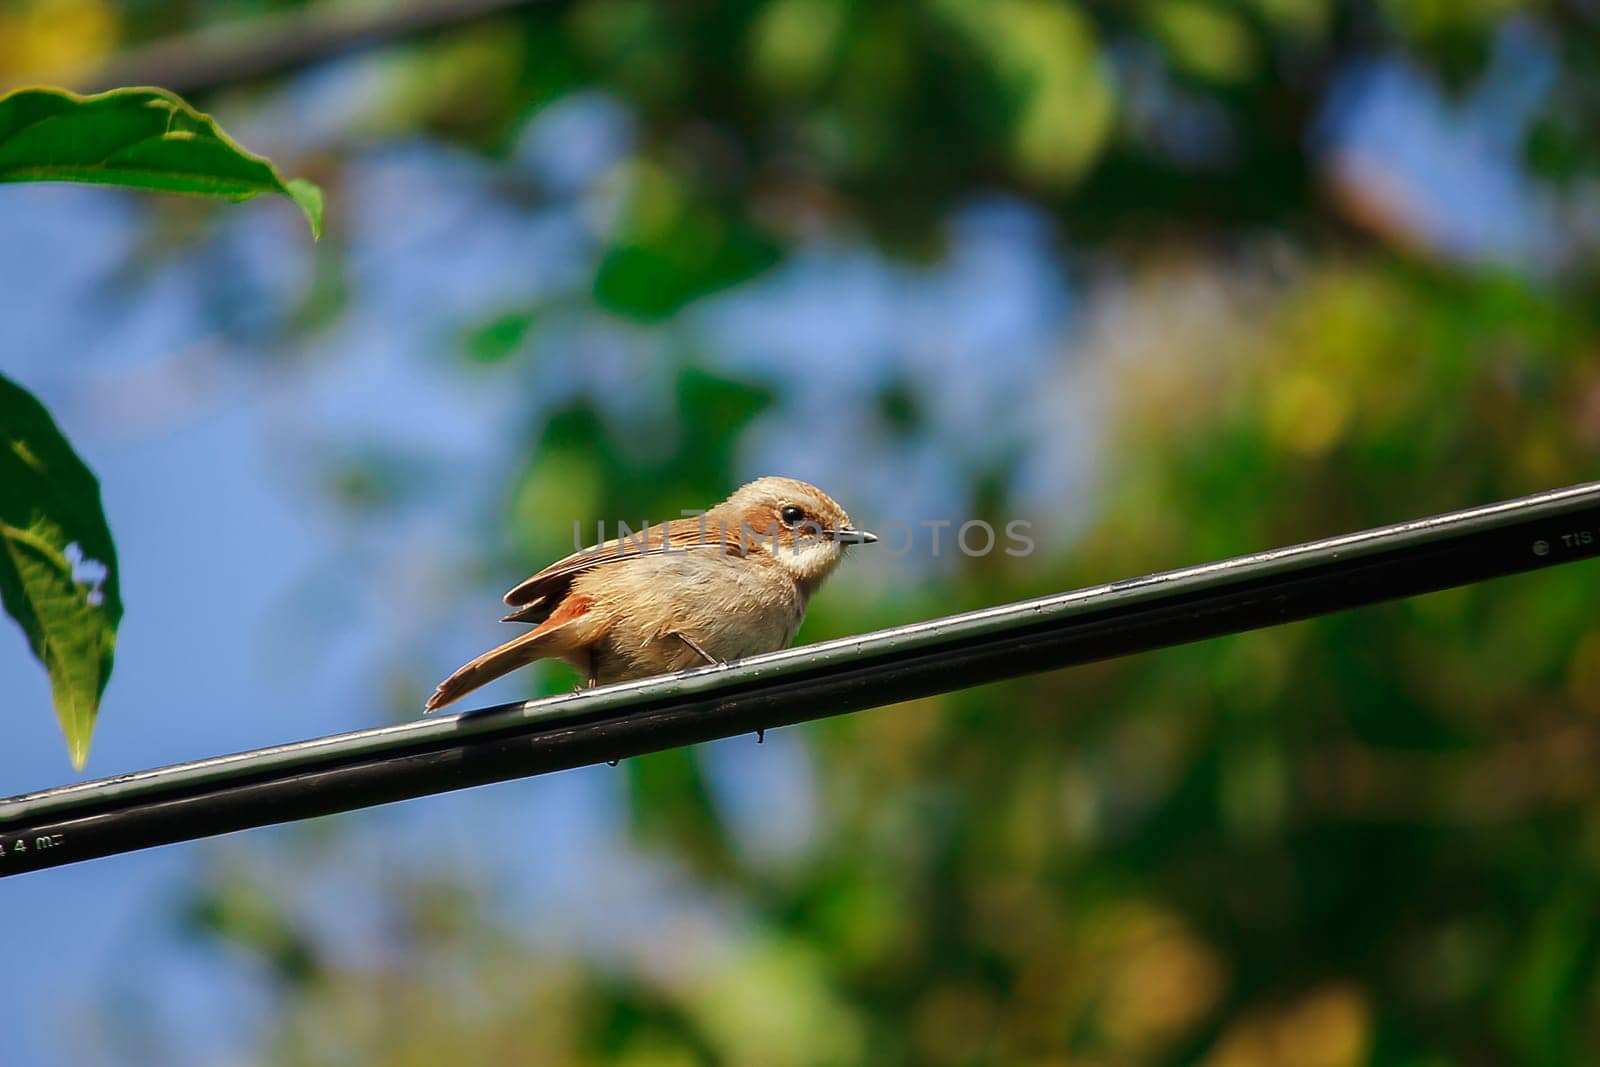 fulvetta (bird) on the power cord In Doi Inthanon National Park, Thailand by Puripatt